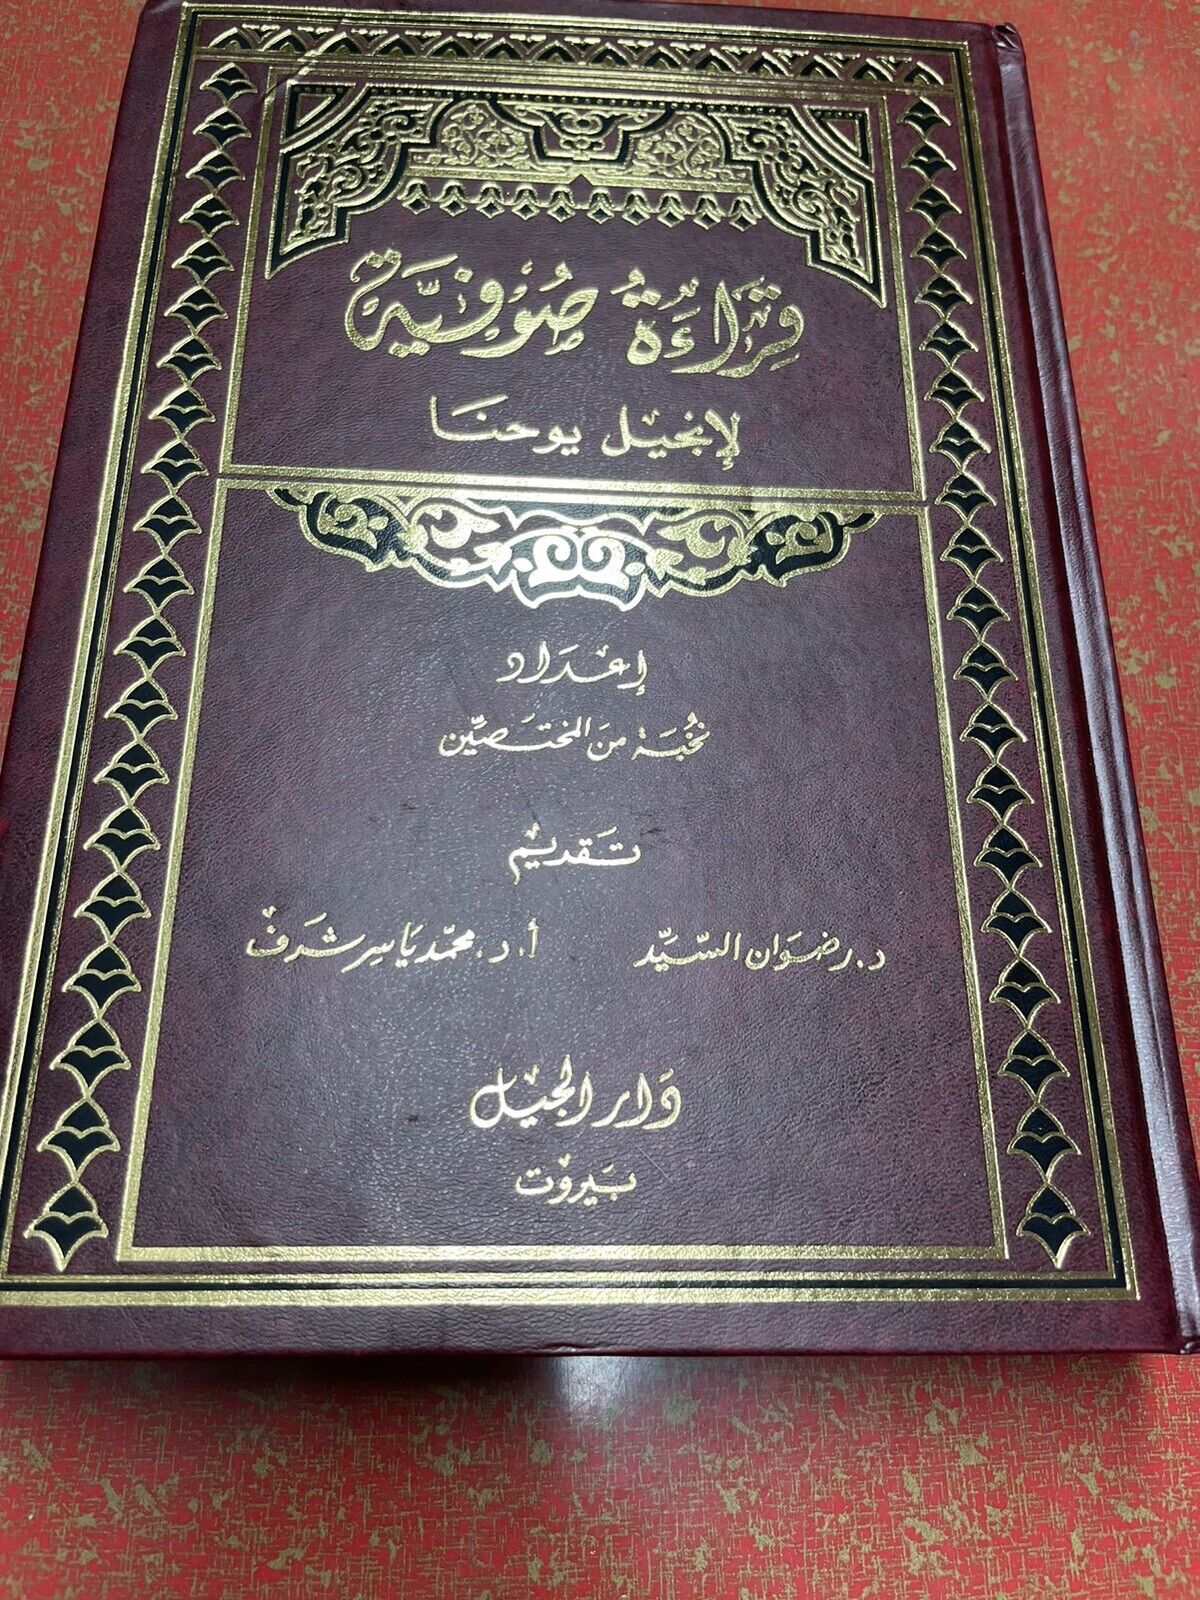 Islamic Religious book 2017 hardcover in Arabic